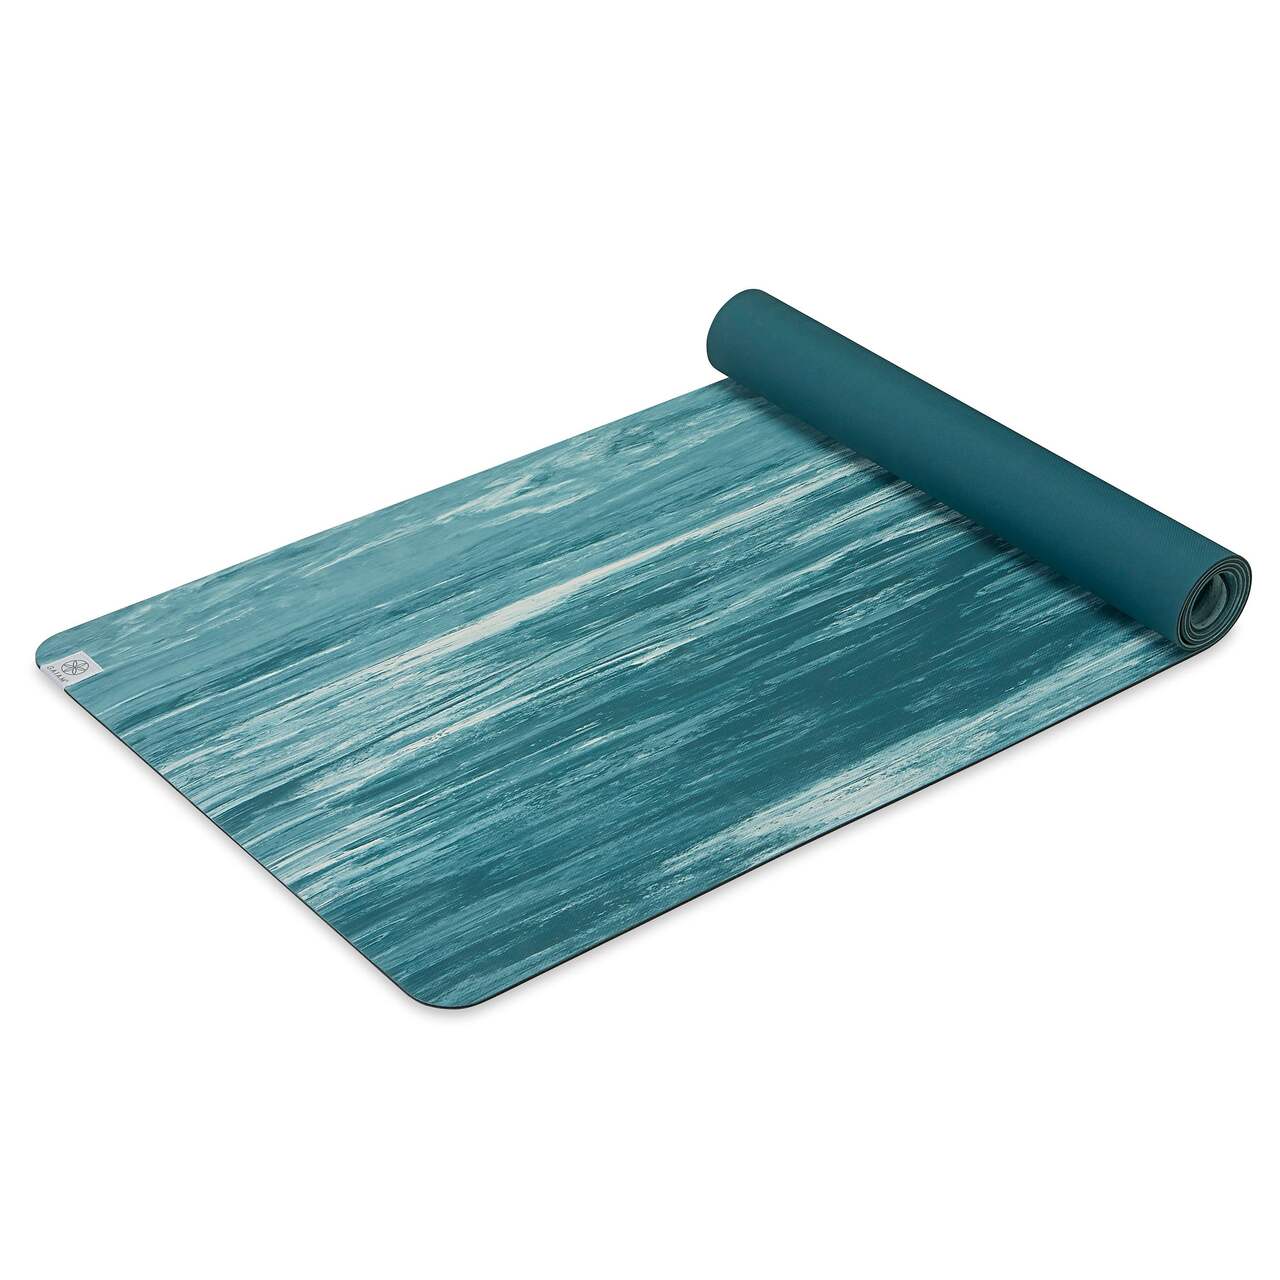 Gaiam Rubber Yoga Mat, Turquoise, 4-mm